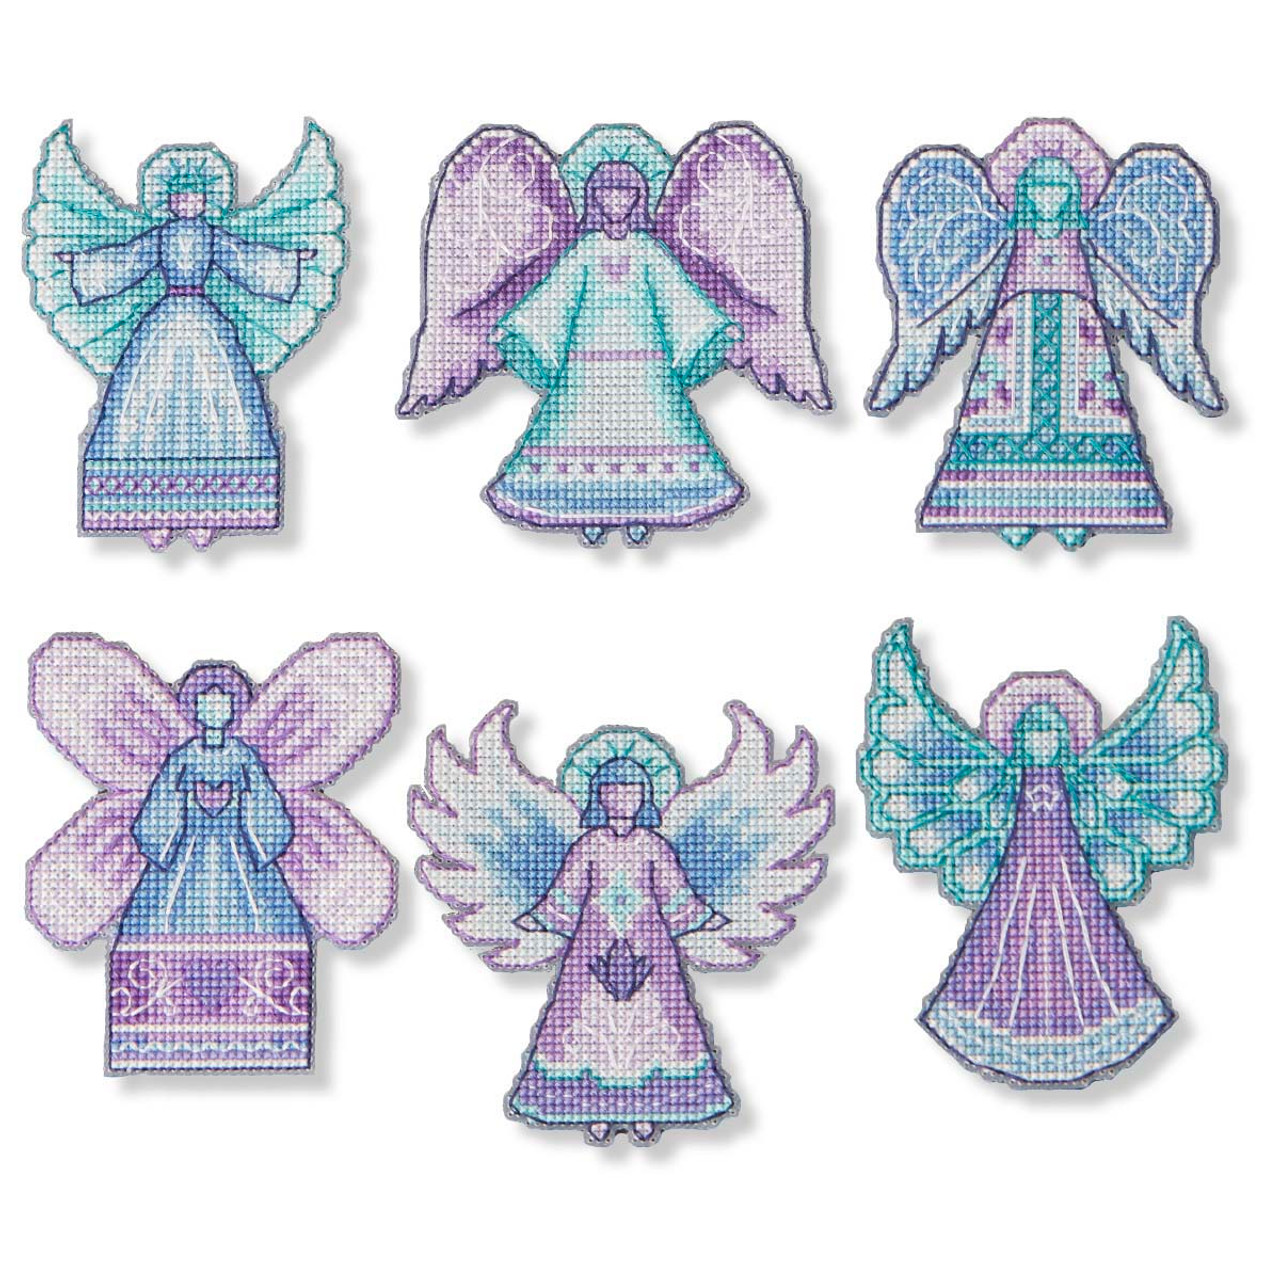 Autumn Angel Plastic Canvas Kit by Design Works Crafts